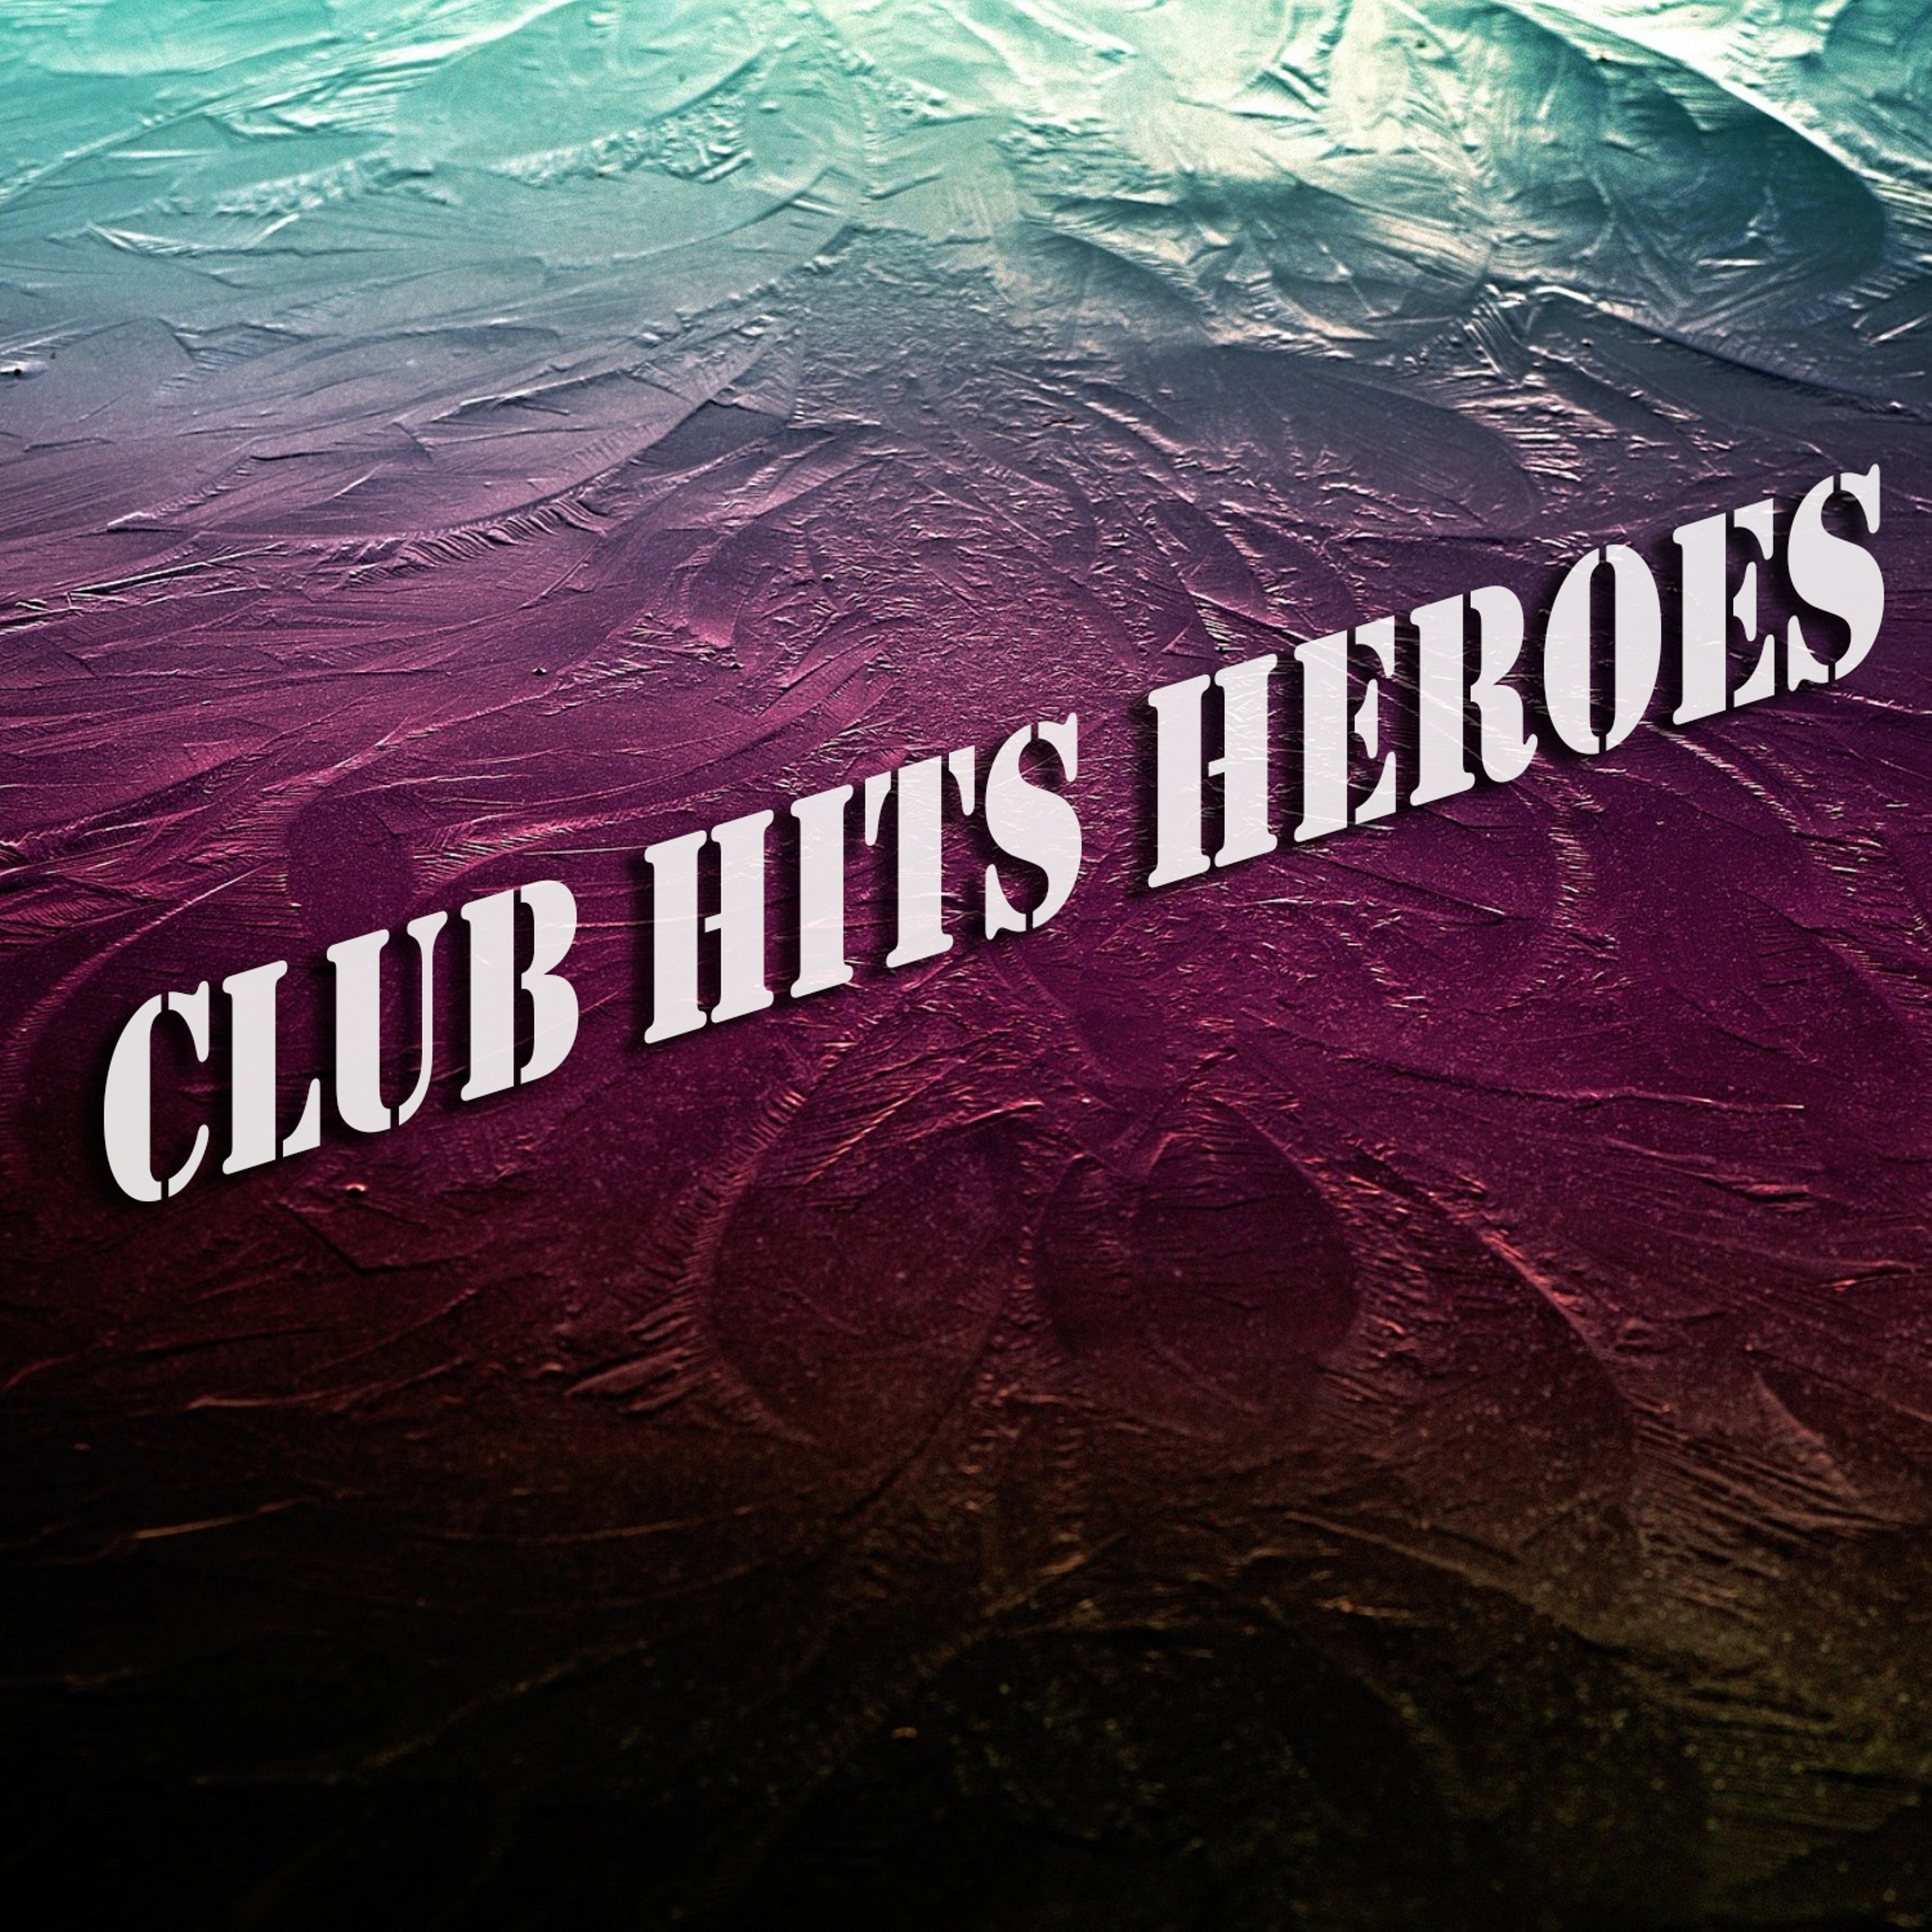 Club Hits Heroes